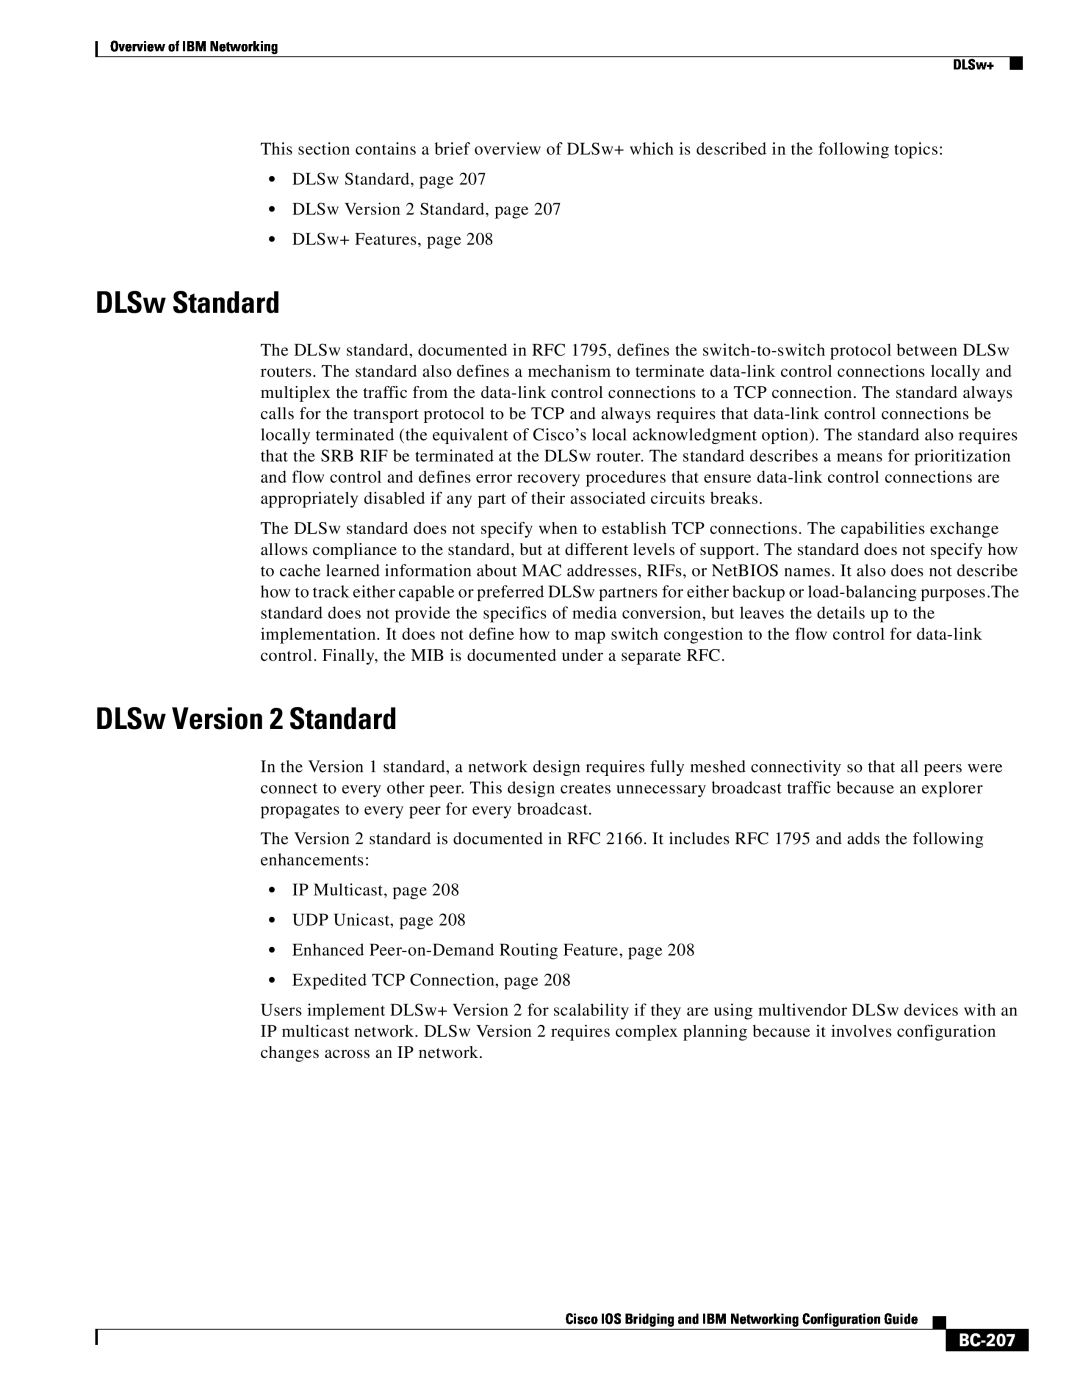 IBM BC-203 manual DLSw Standard, DLSw Version 2 Standard, BC-207 